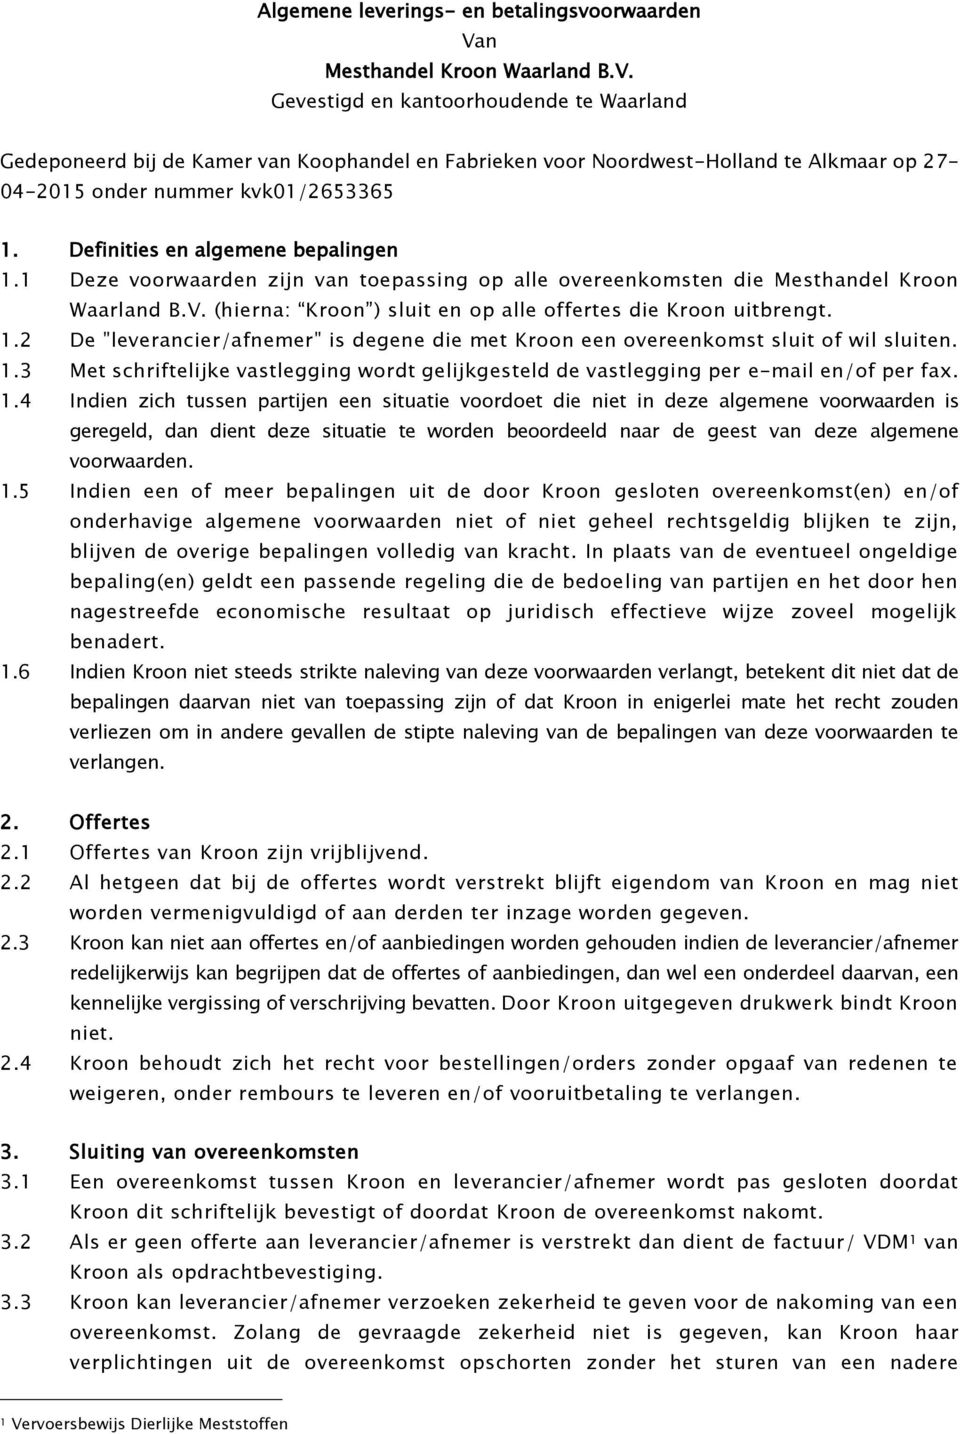 Gevestigd en kantoorhoudende te Waarland Gedeponeerd bij de Kamer van Koophandel en Fabrieken voor Noordwest-Holland te Alkmaar op 27-04-2015 onder nummer kvk01/2653365 1.